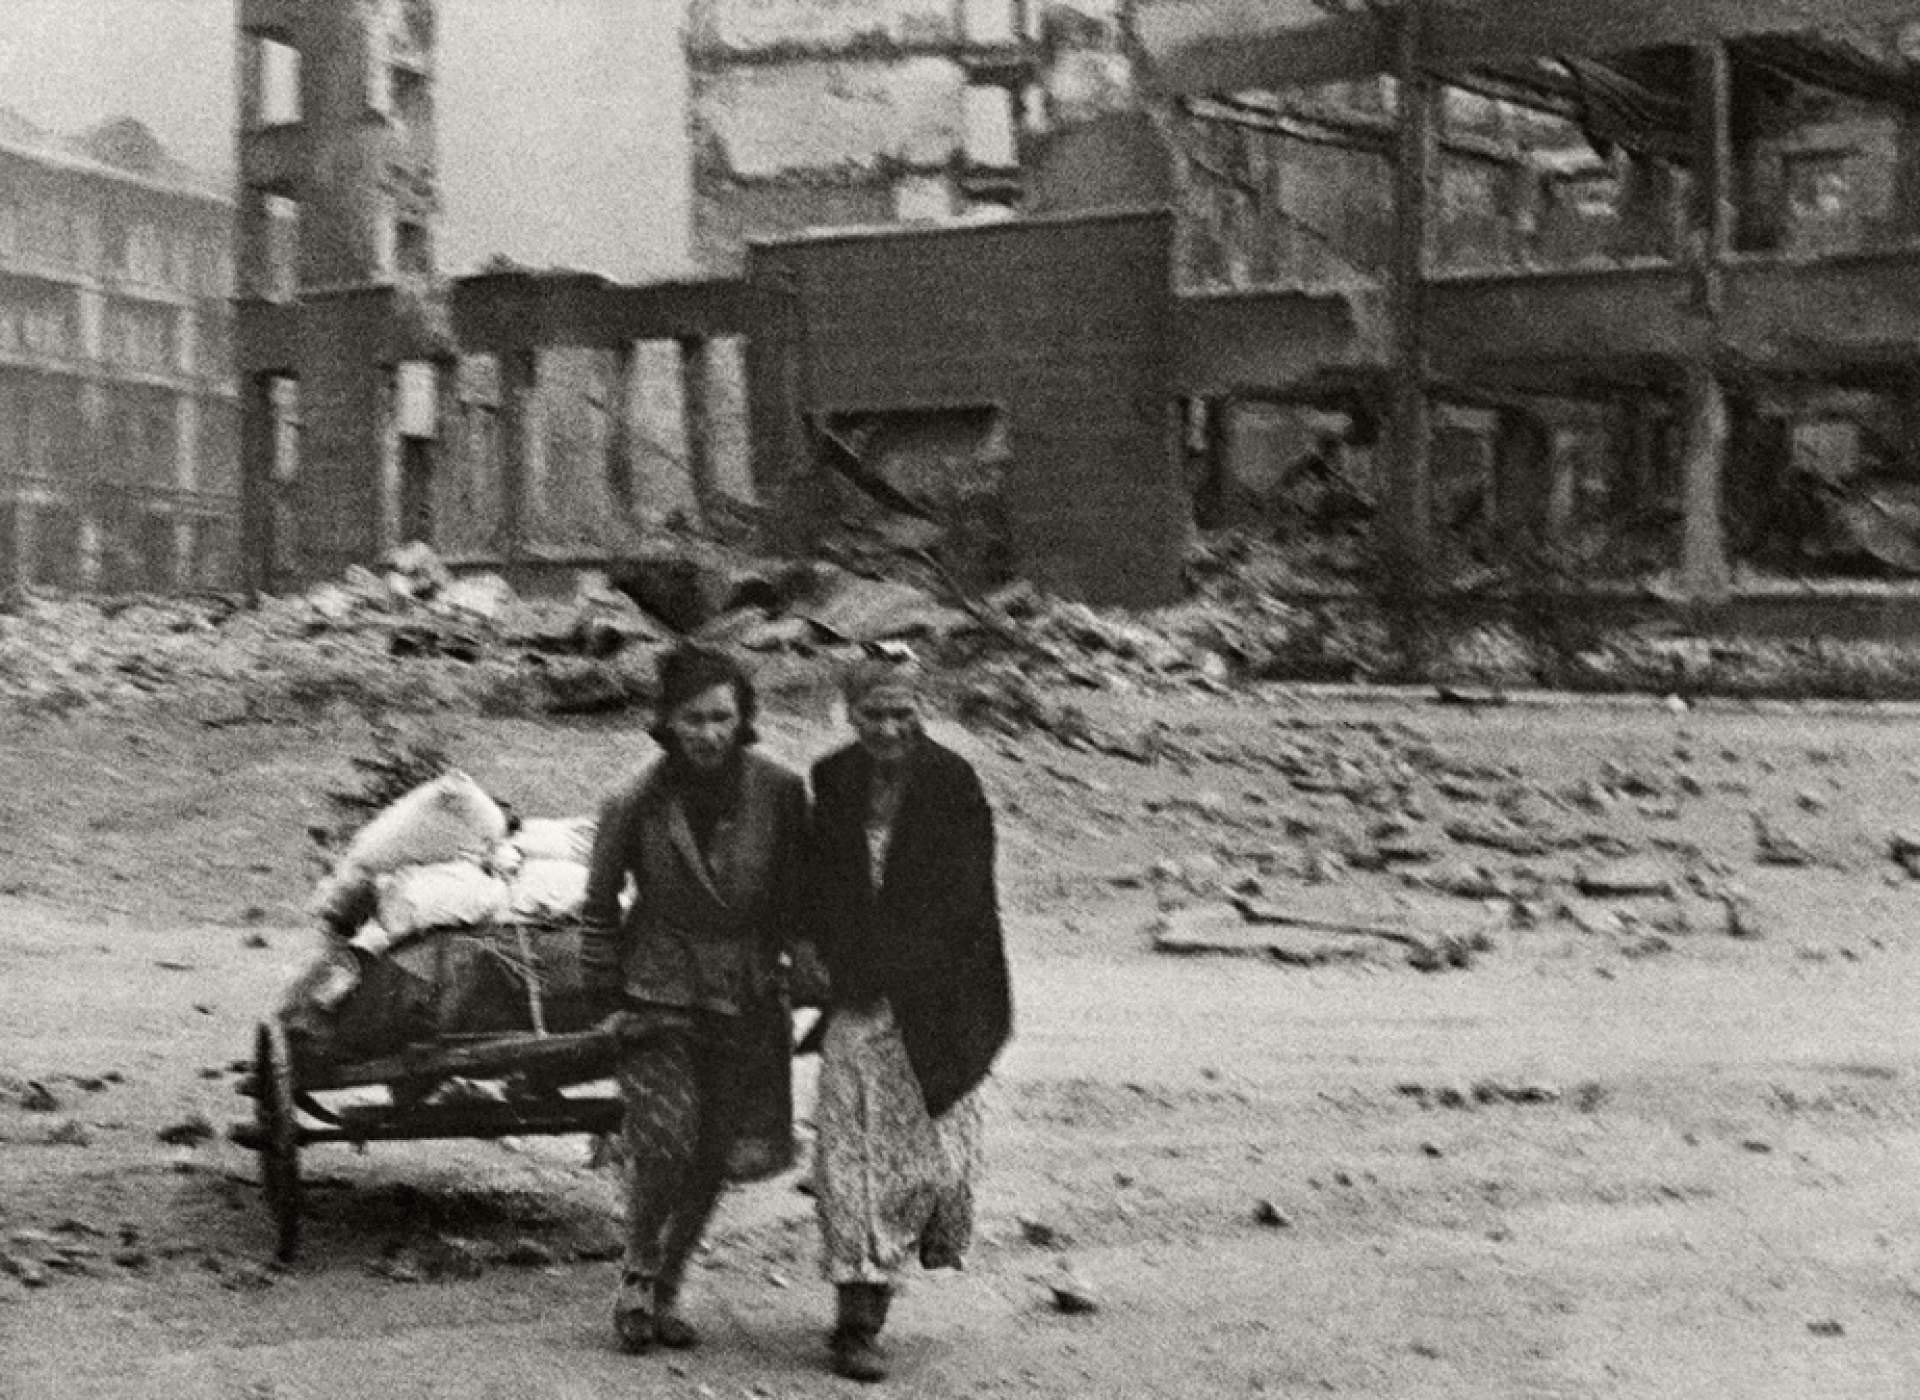 Stalingraders, Emmanuil Evzerikhin, 1942. Source: МАММ/МDF